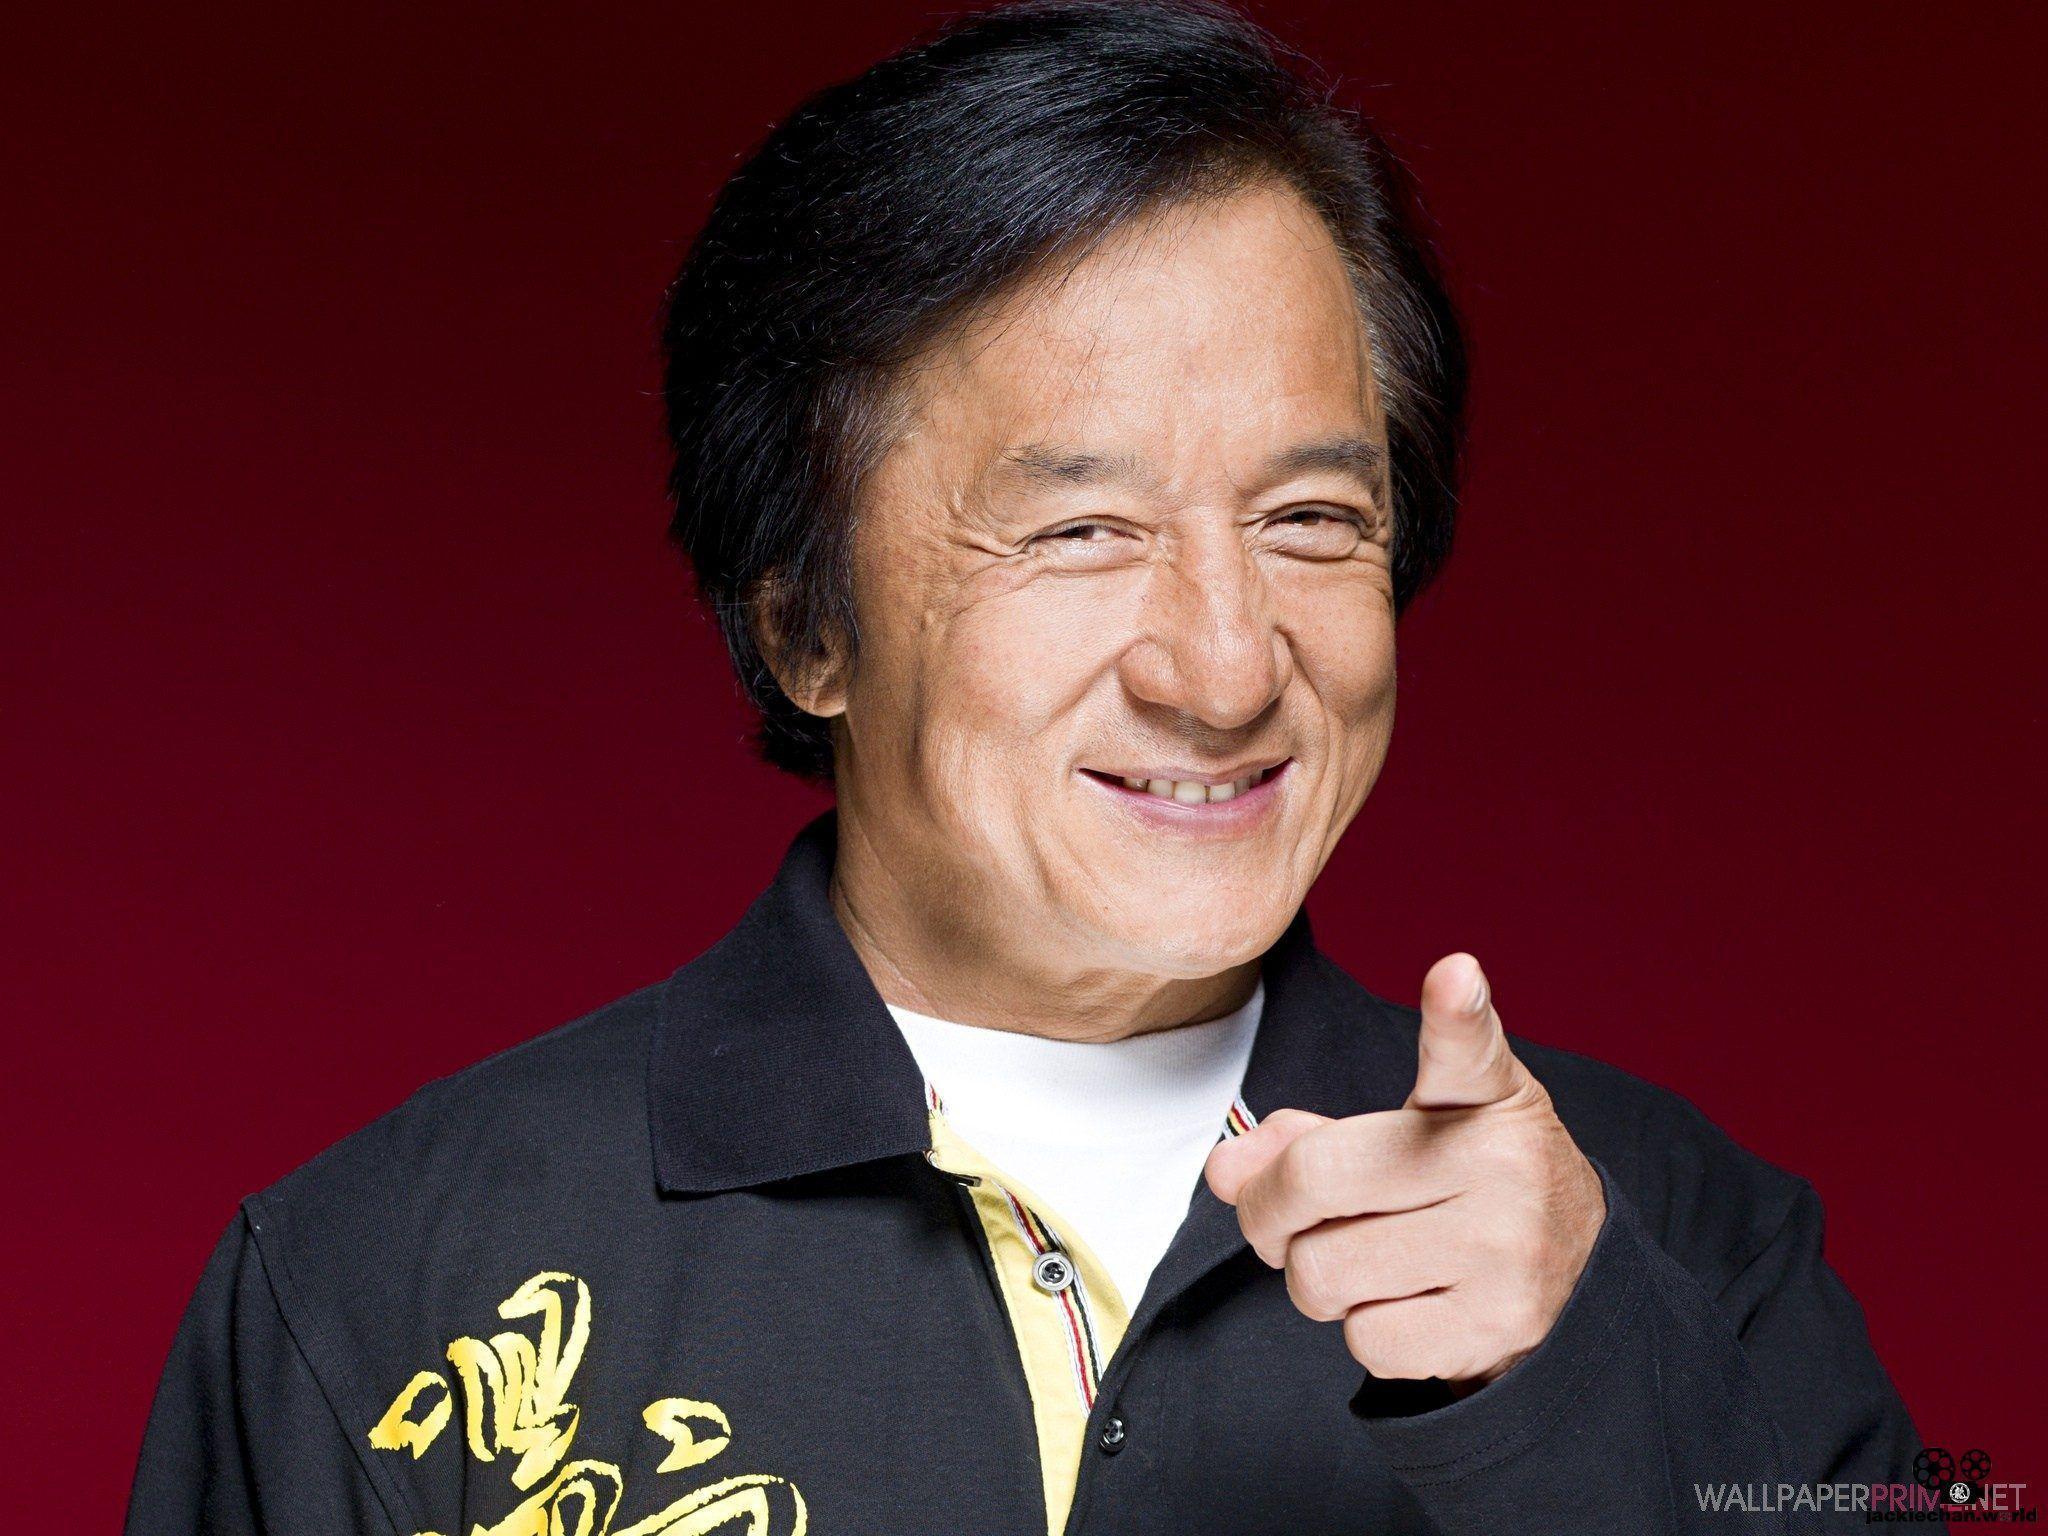 Jackie Chan Wallpaper updates 14 July 2015. Jackie Chan's Fans